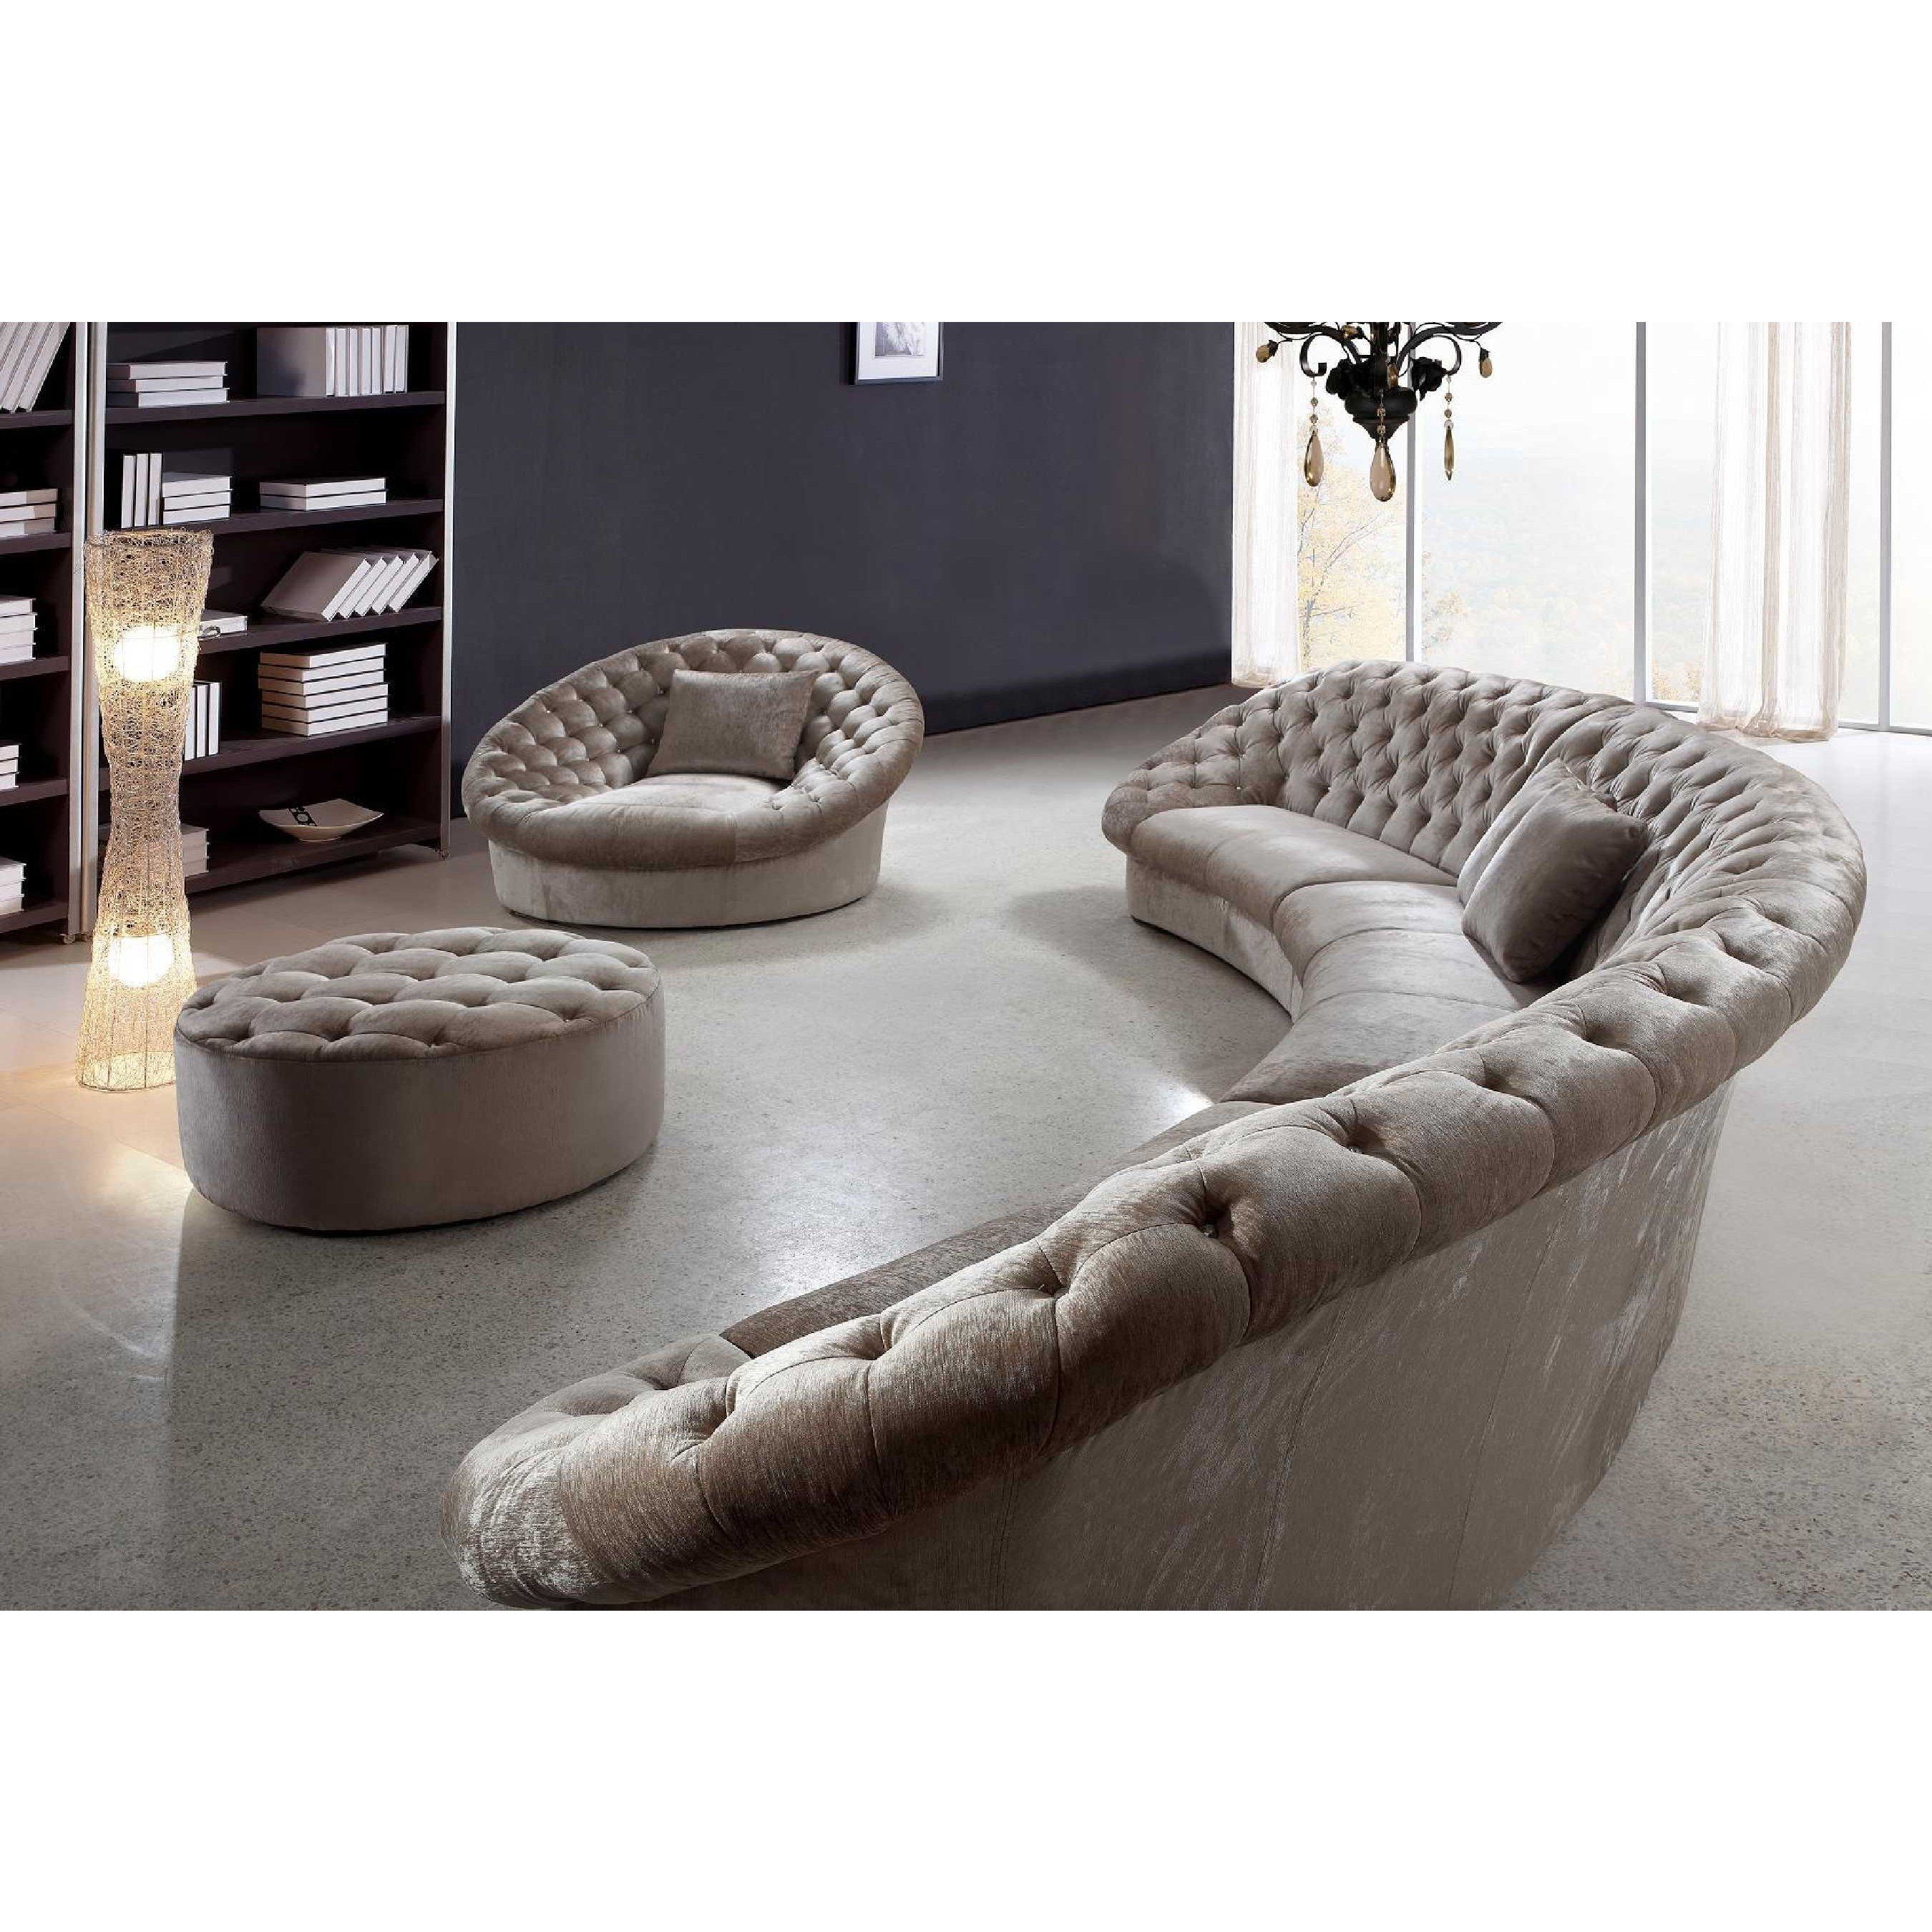 JVmoebel Chesterfield-Sofa Designer Rundes Polstersofa Chesterfield Design Modern Neu, Made in Europe